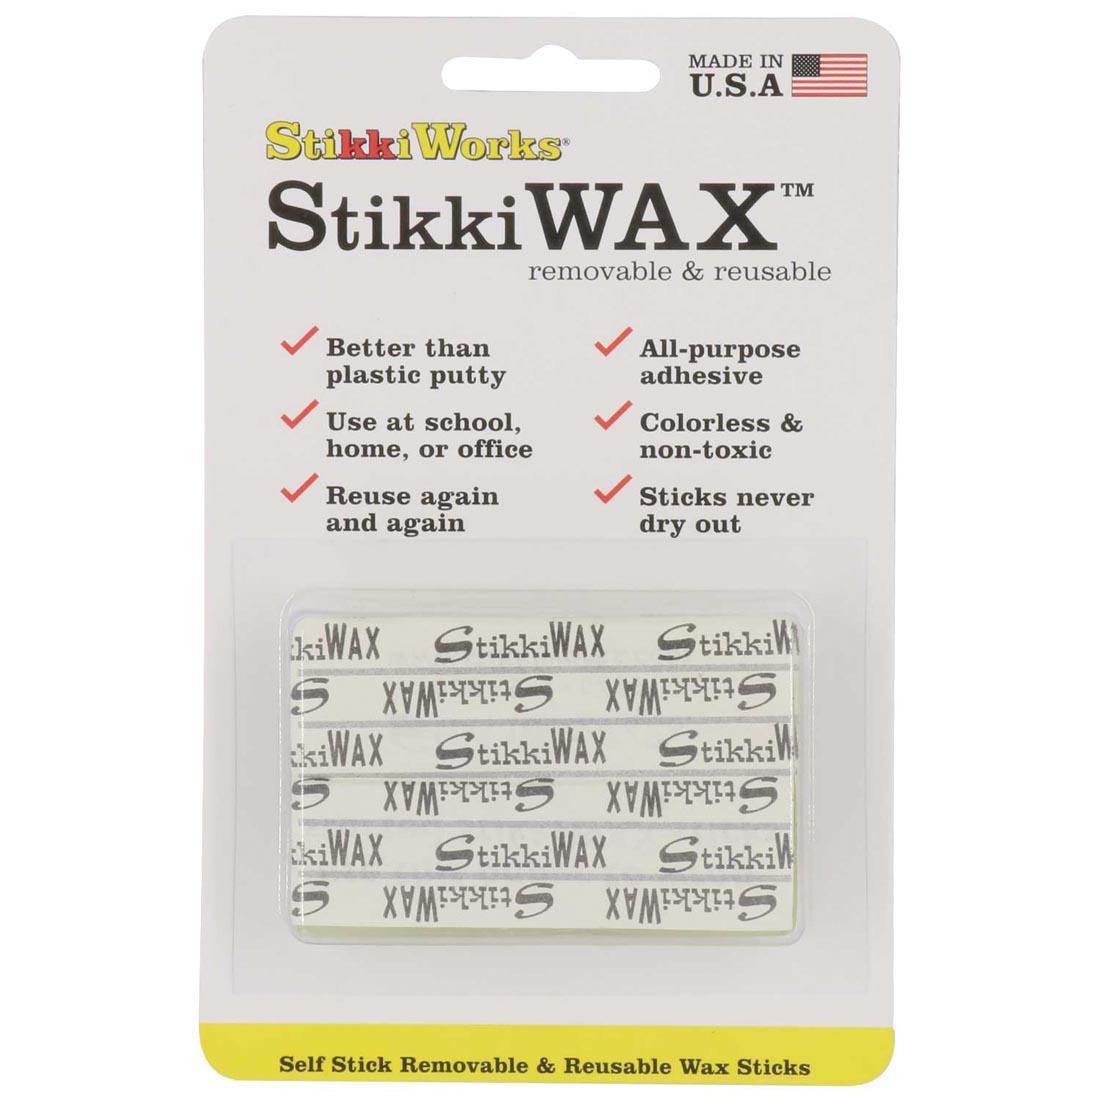 StikkiWax Sticks